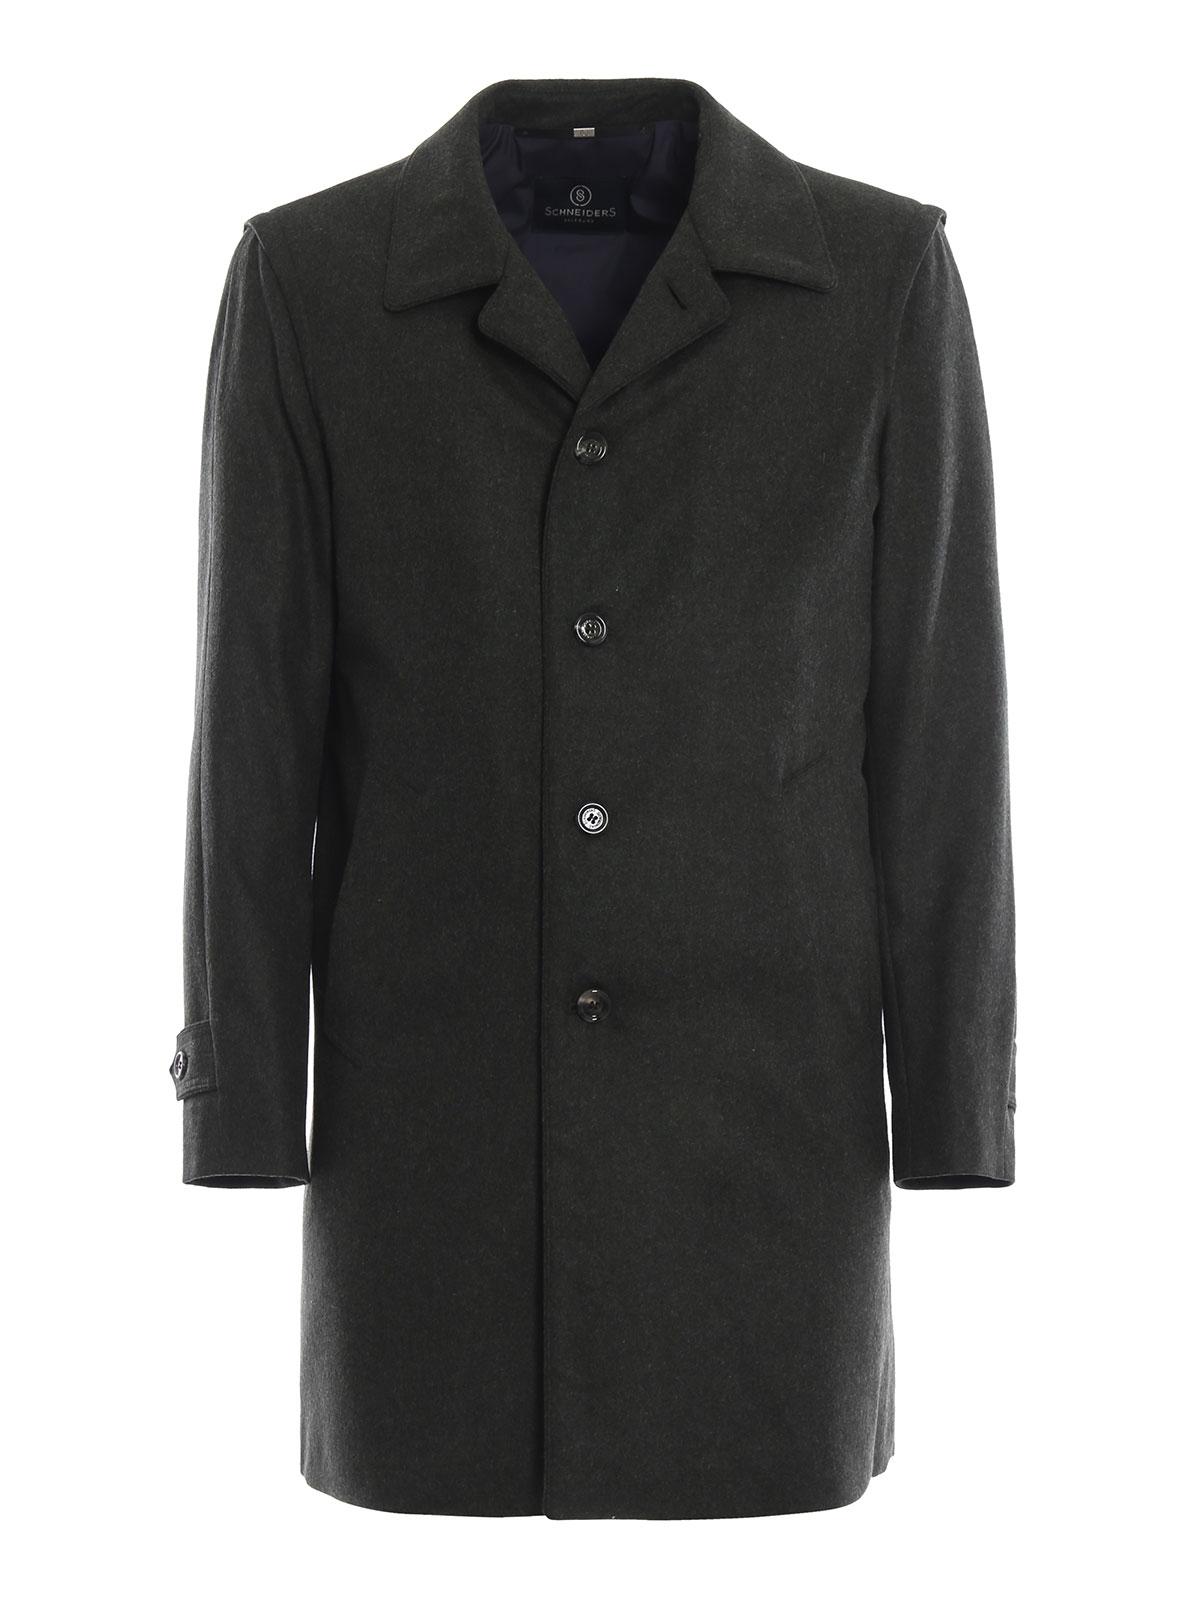 Schneiders Forest Green Classic Loden Wool Blend Coat for Men - Lyst